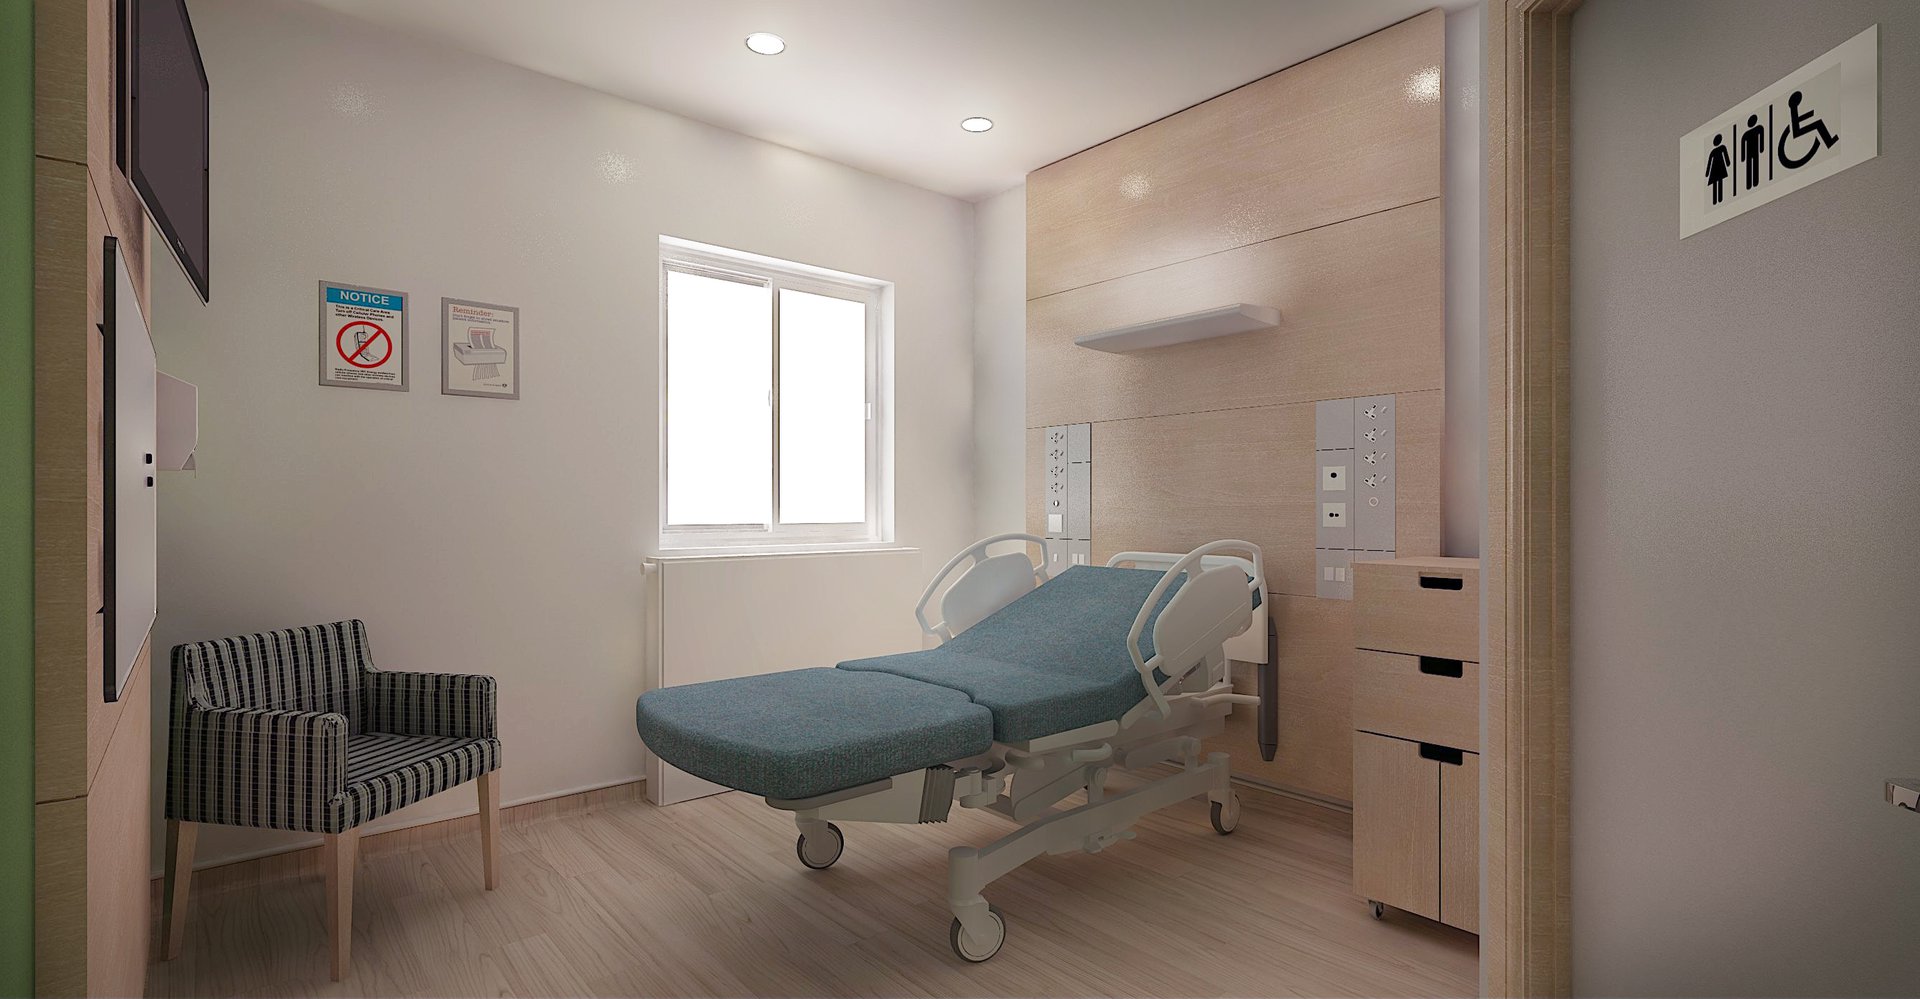 IPJ - Spire Healthcare Bedroom - V1b - Draft.jpg